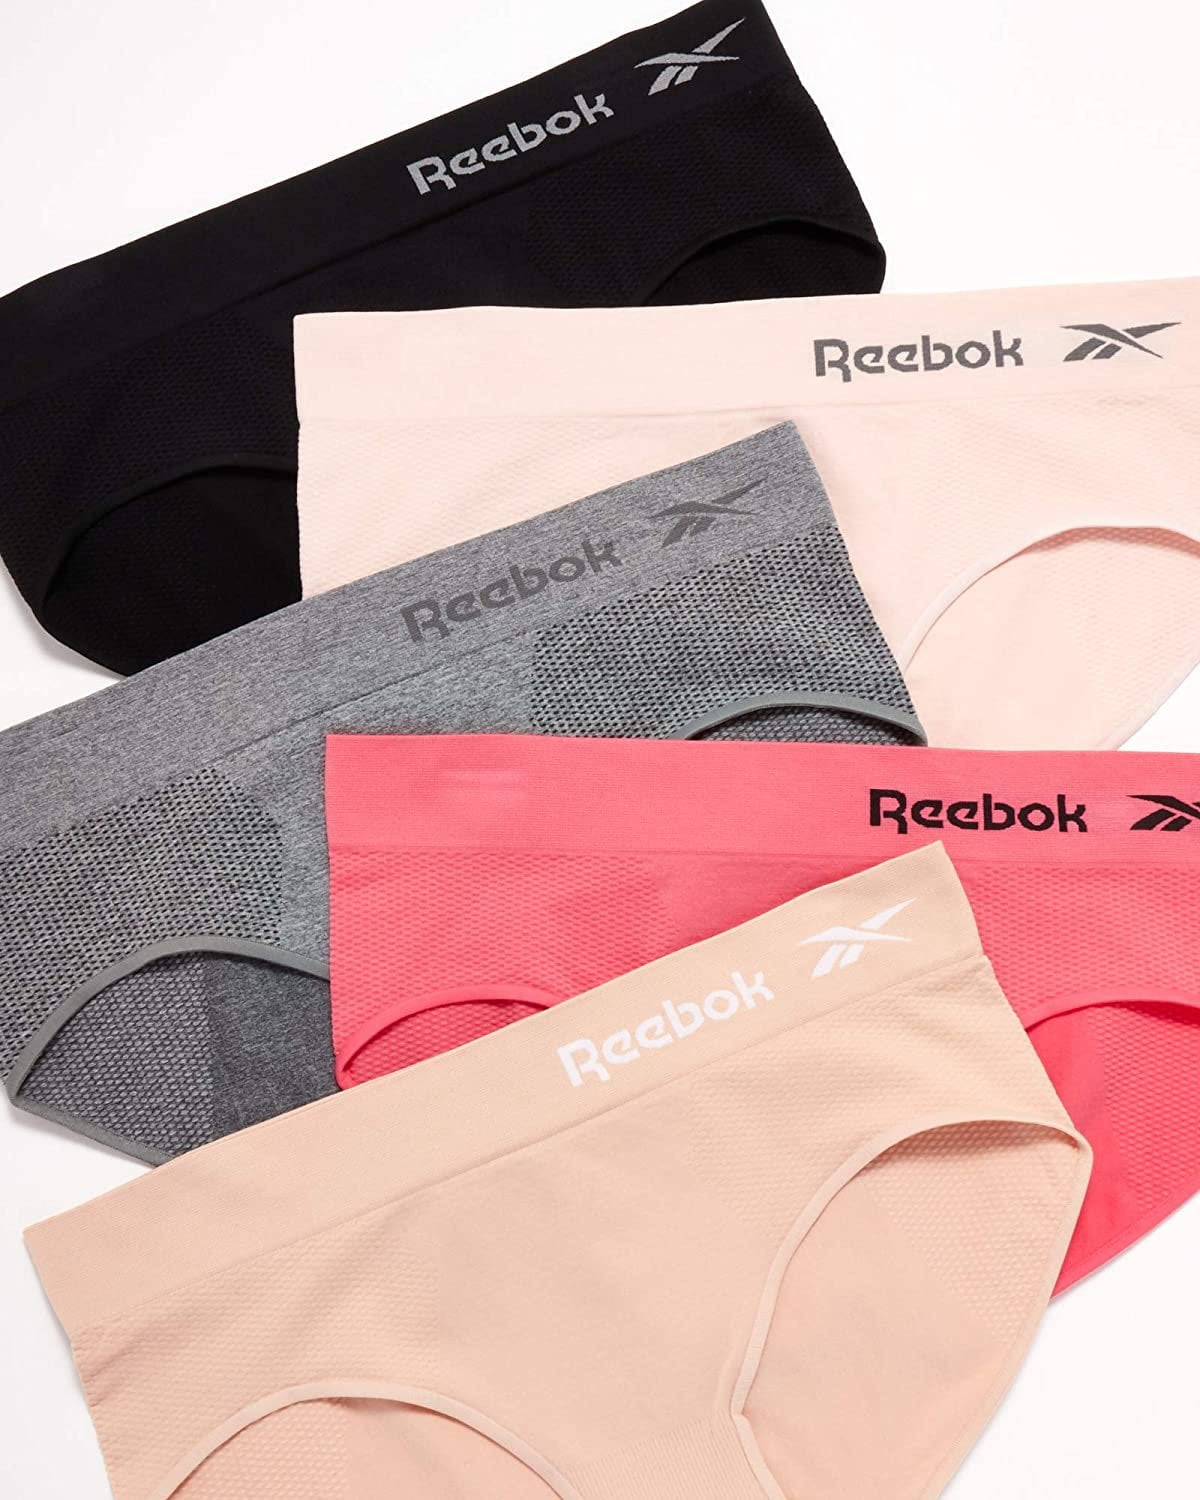 Reebok Women's Seamless Underwear - Hipster, Thong, & Boyshort Panties  (4-pack) - $3 - Walmart In-store - YMMV